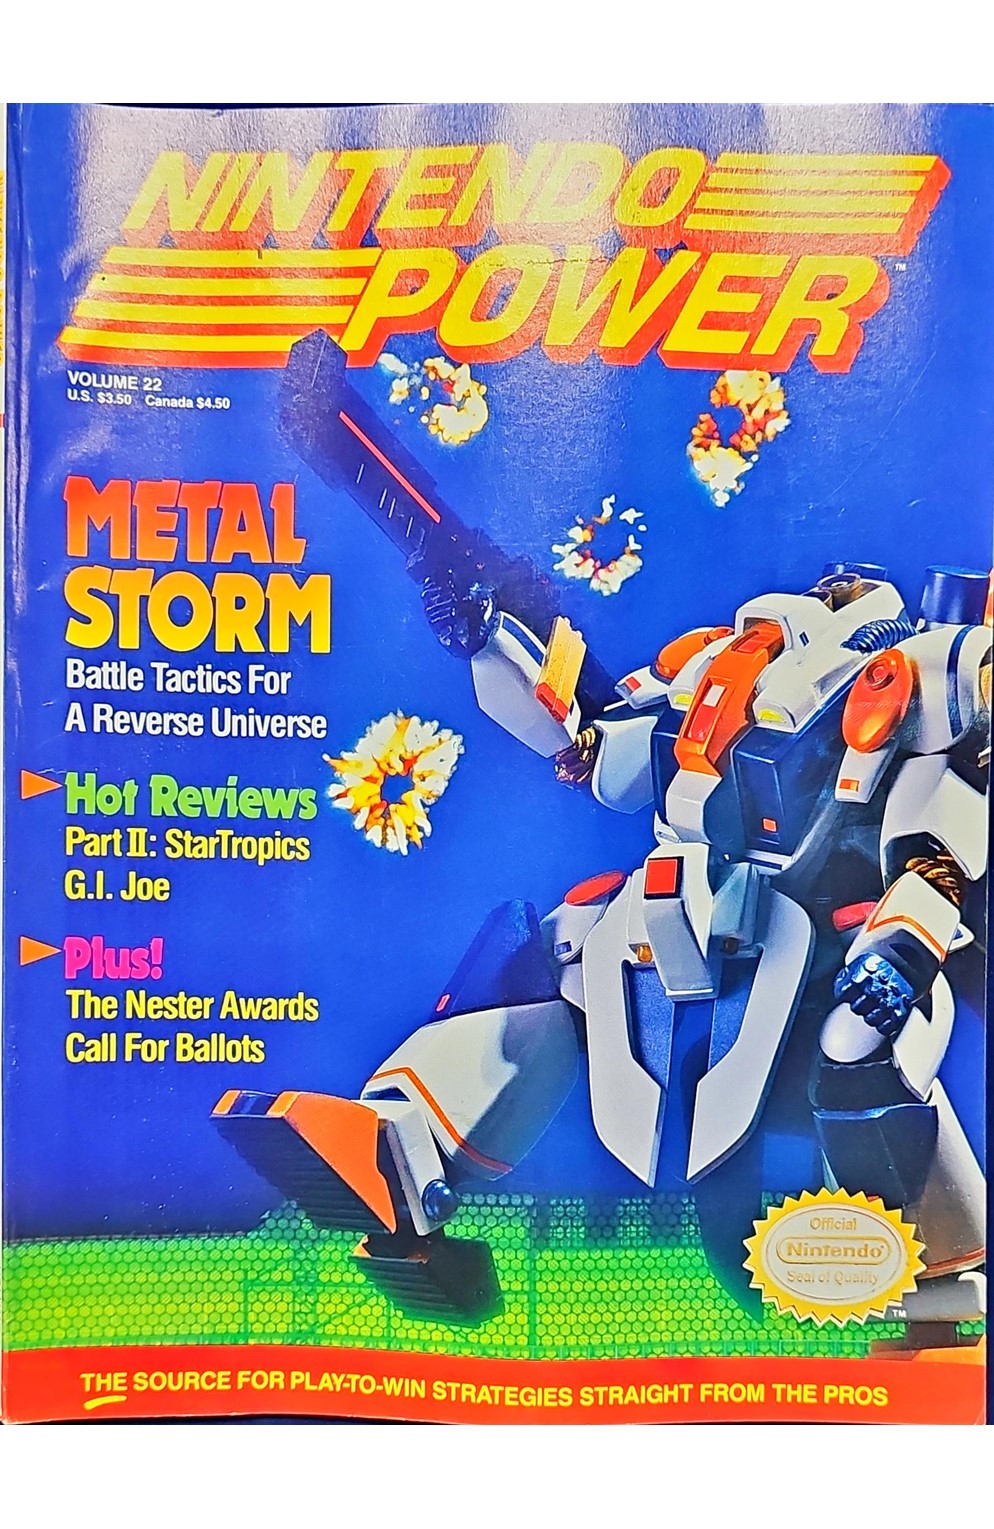 Nintendo Power Volume 22 Metal Storm With Poster